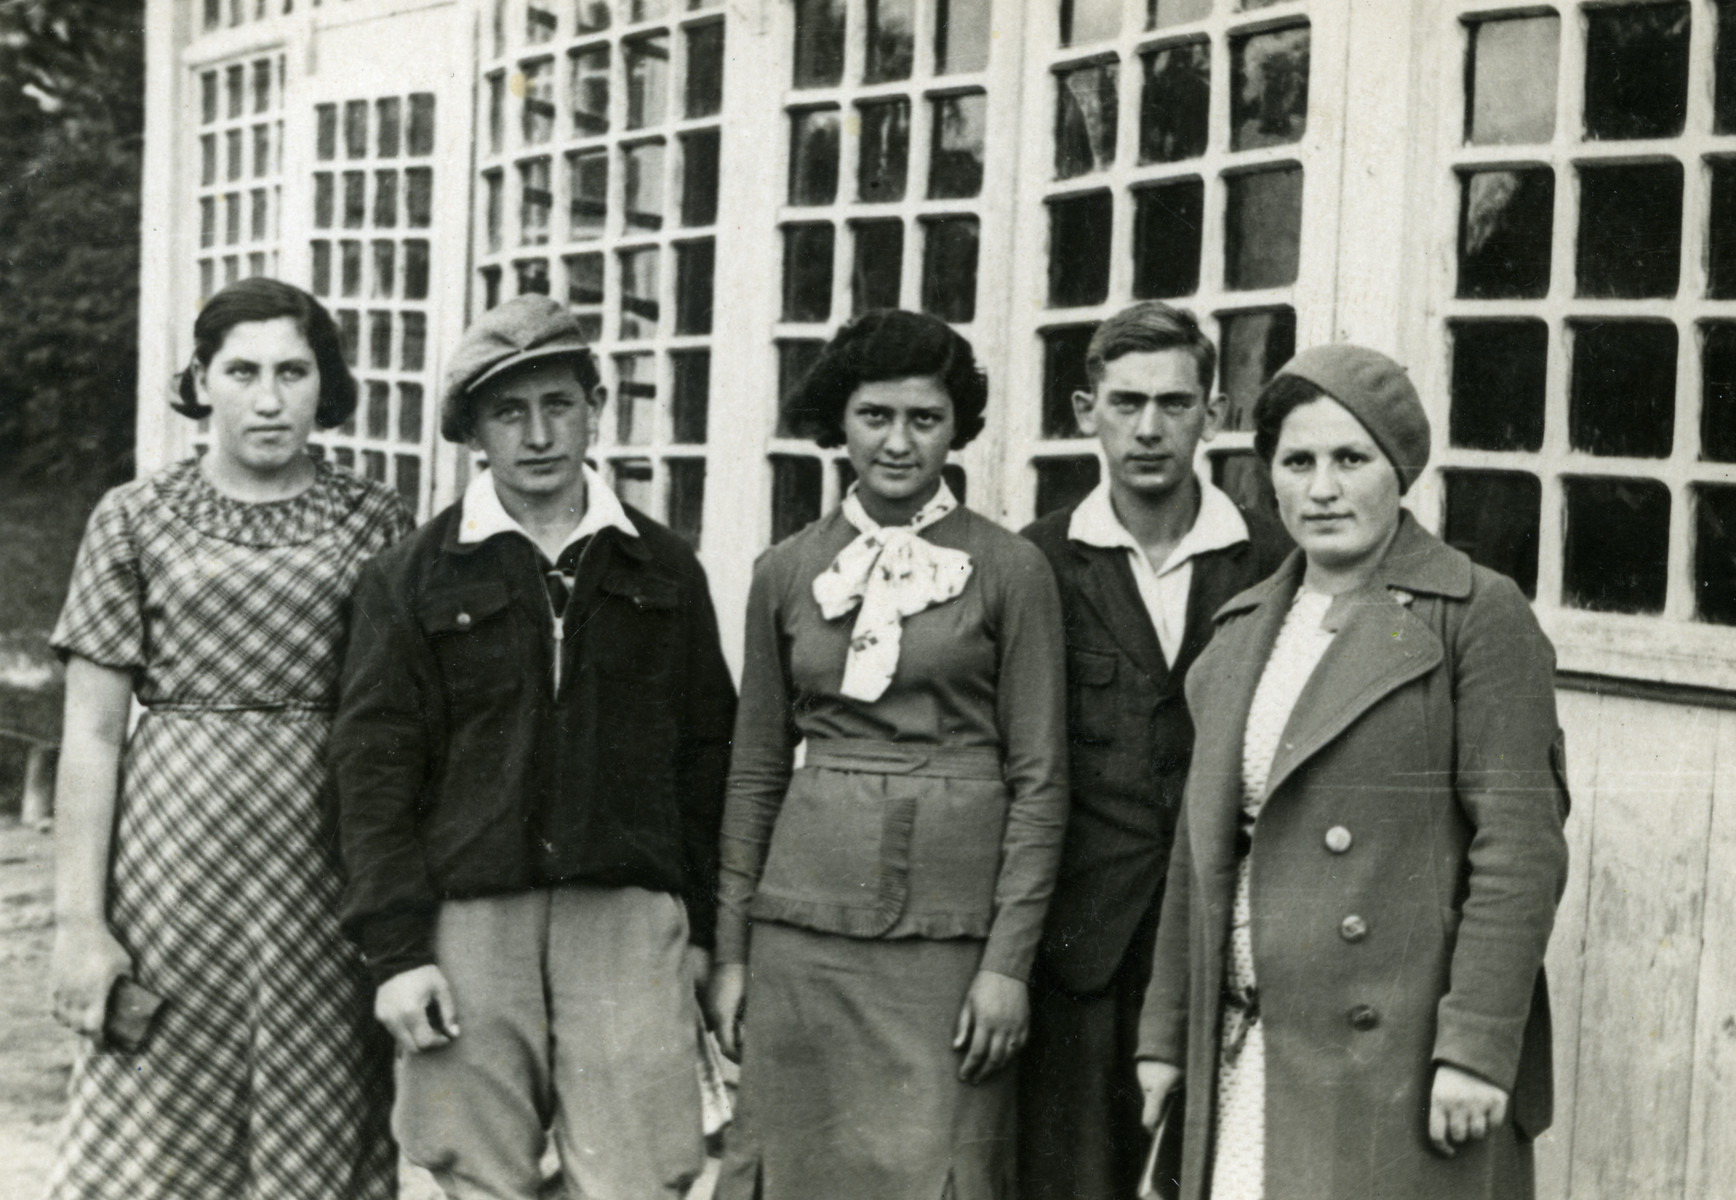 Group portrait of members of Hashomer Hatzair in Kielce.

From left to right are Dina Itskovic, Nachum Finkelstein, Sara Laks, Chaim Leichter and Sara Golemblowski.